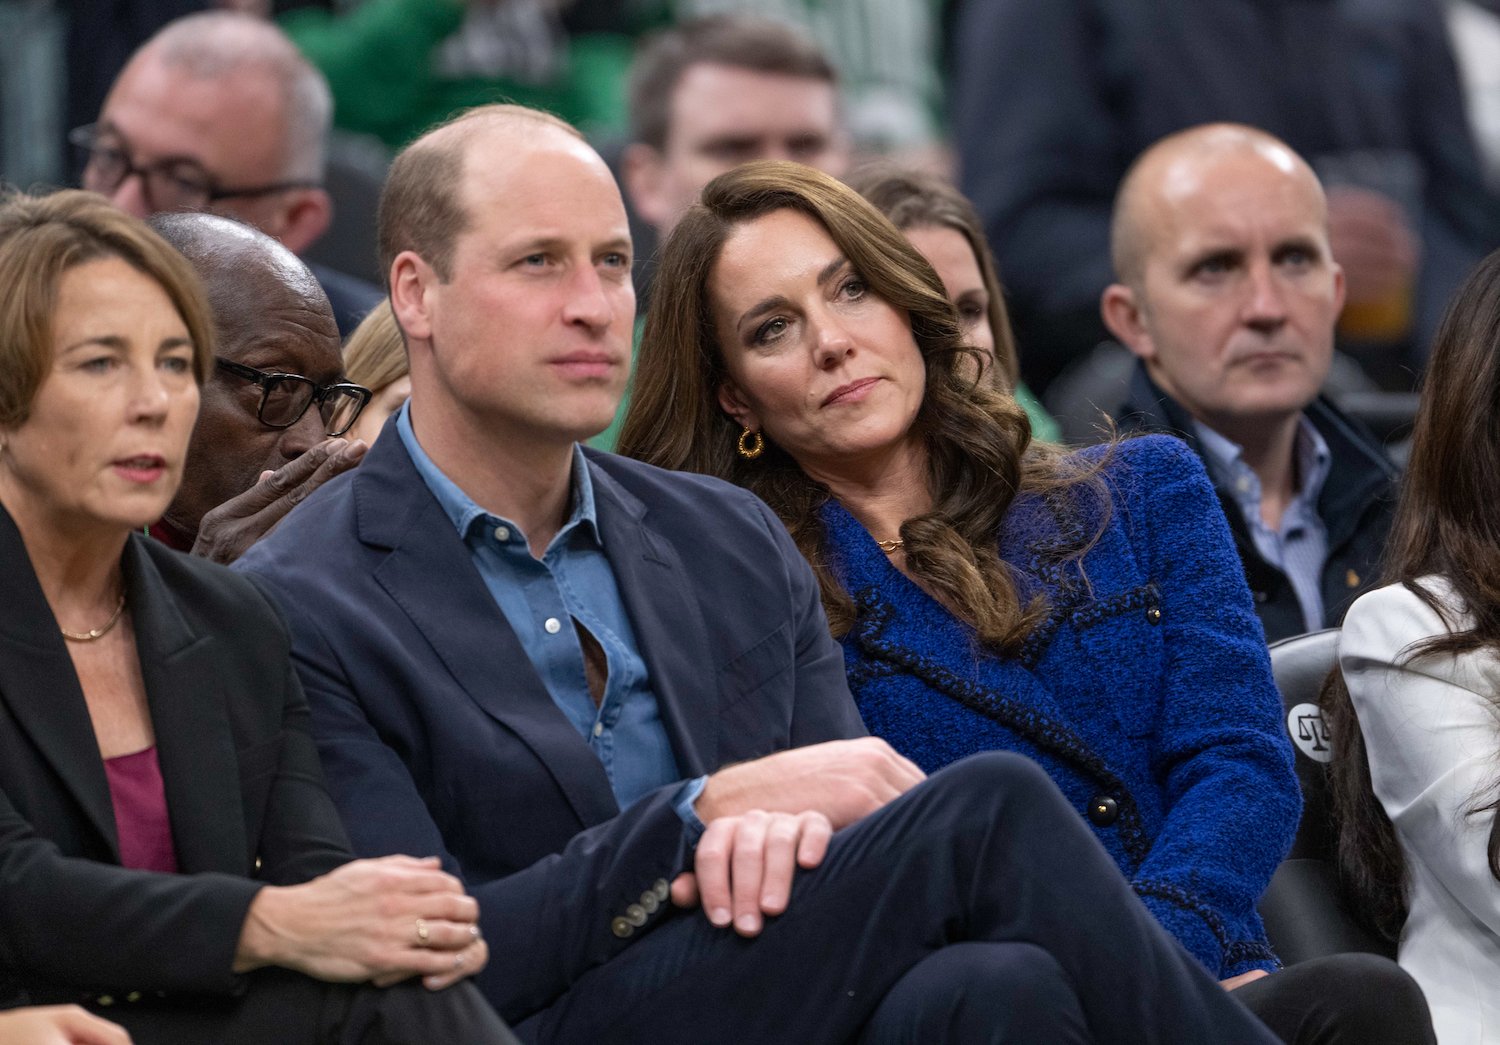 Prince William and Kate Middleton body language on display at Boston Celtics basketball game